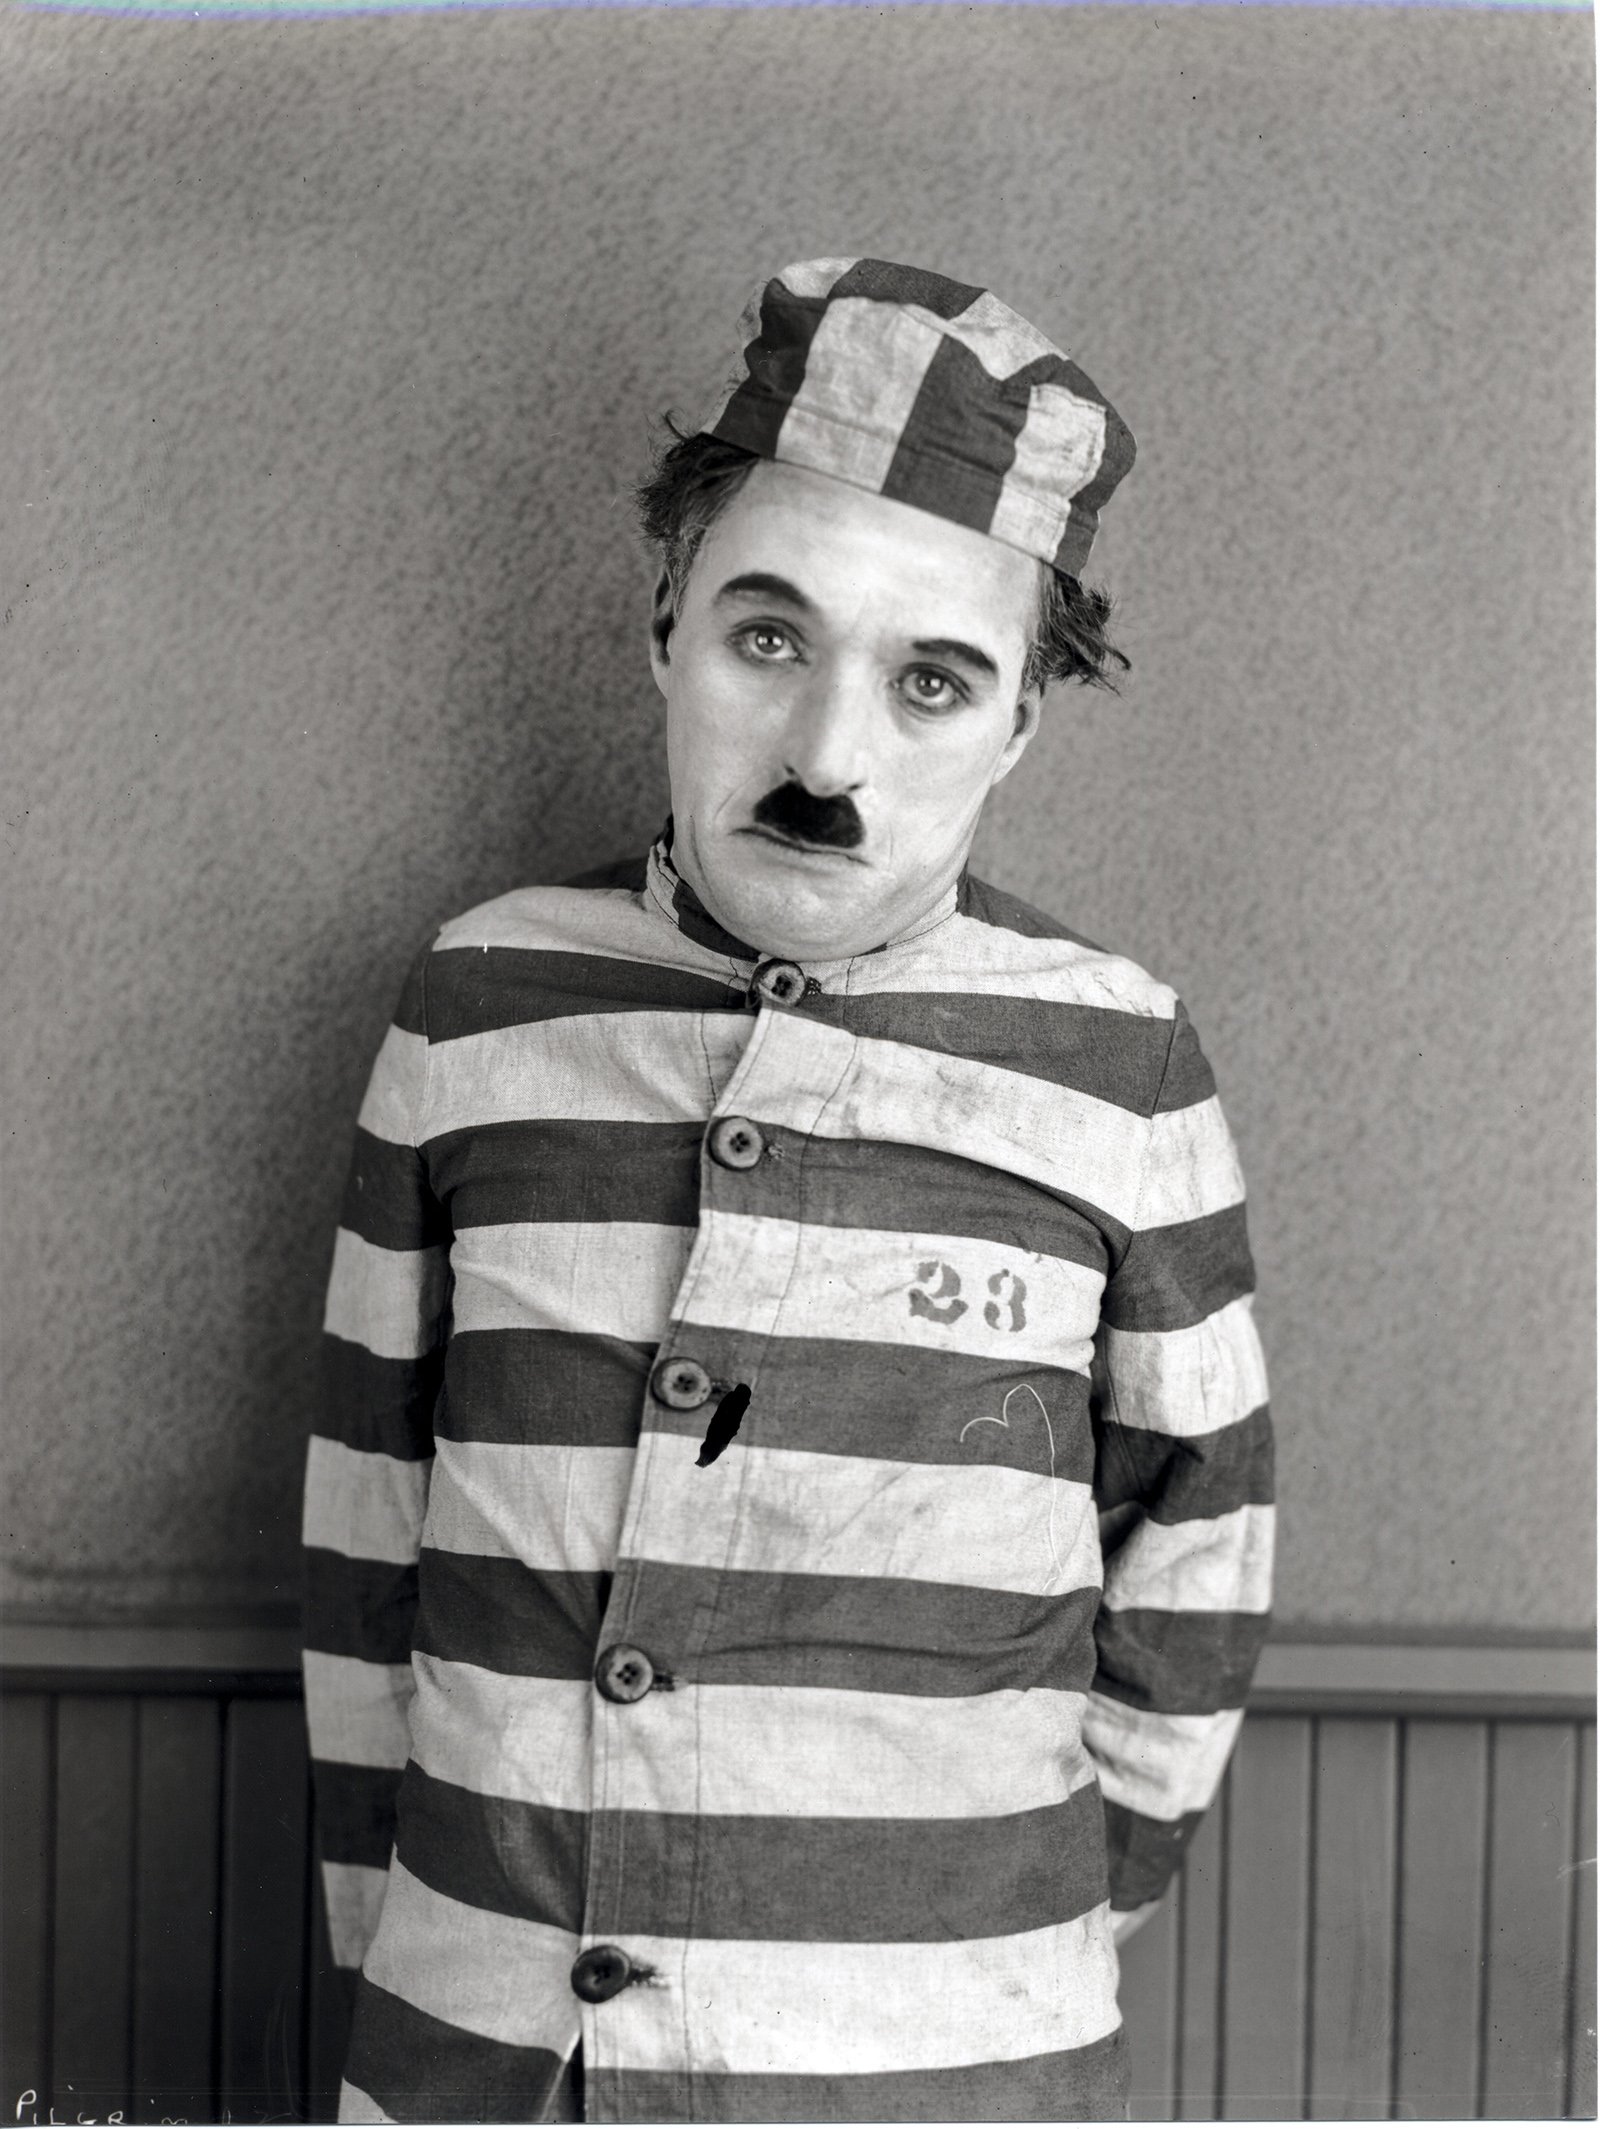 Charlie Chaplin Photos - Charlie Chaplin Images: Ravepad - the place to ...